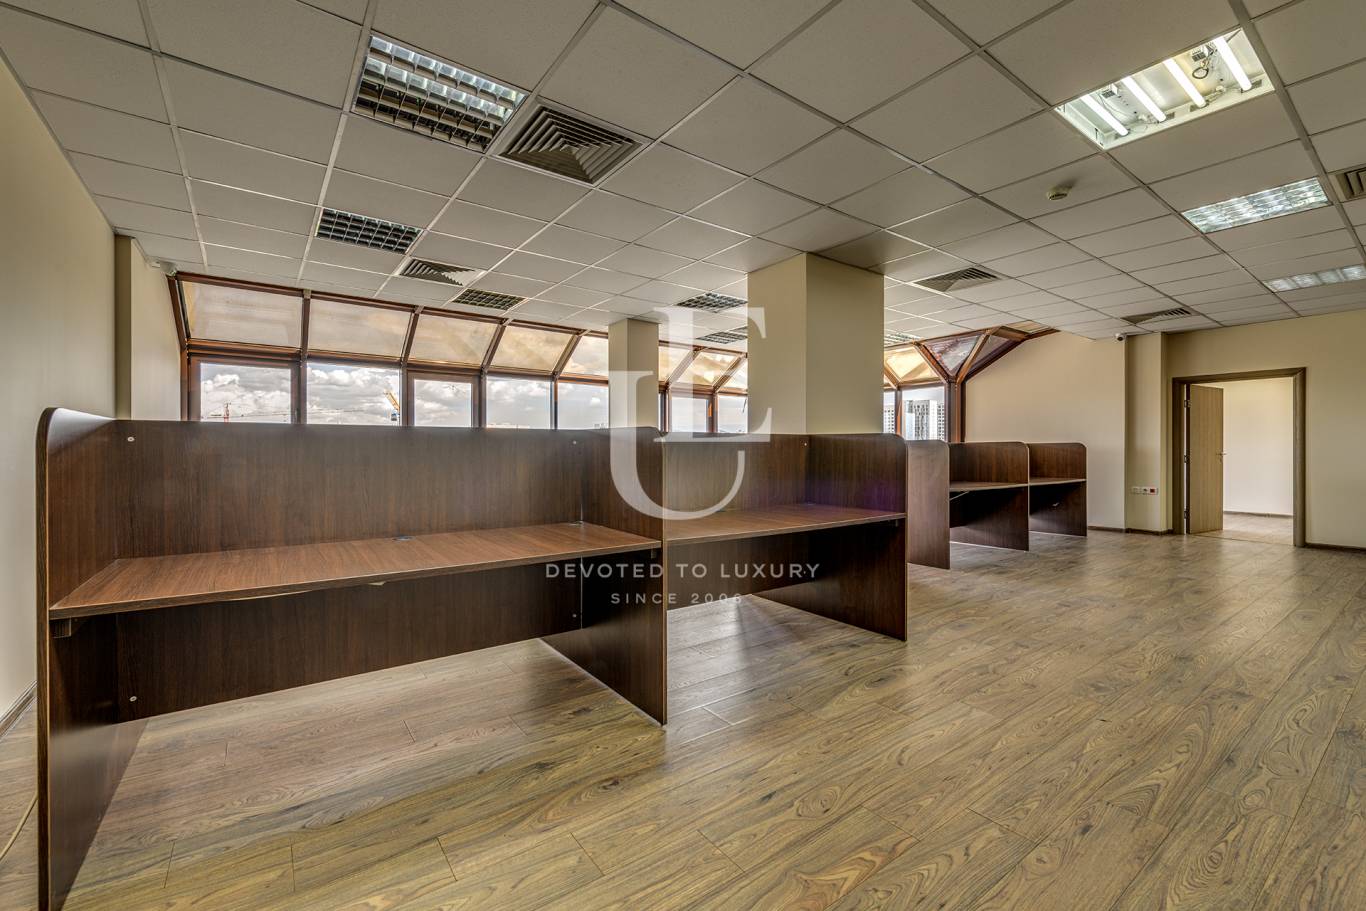 Офис под наем в София, Студентски град - код на имота: K17700 - image 4